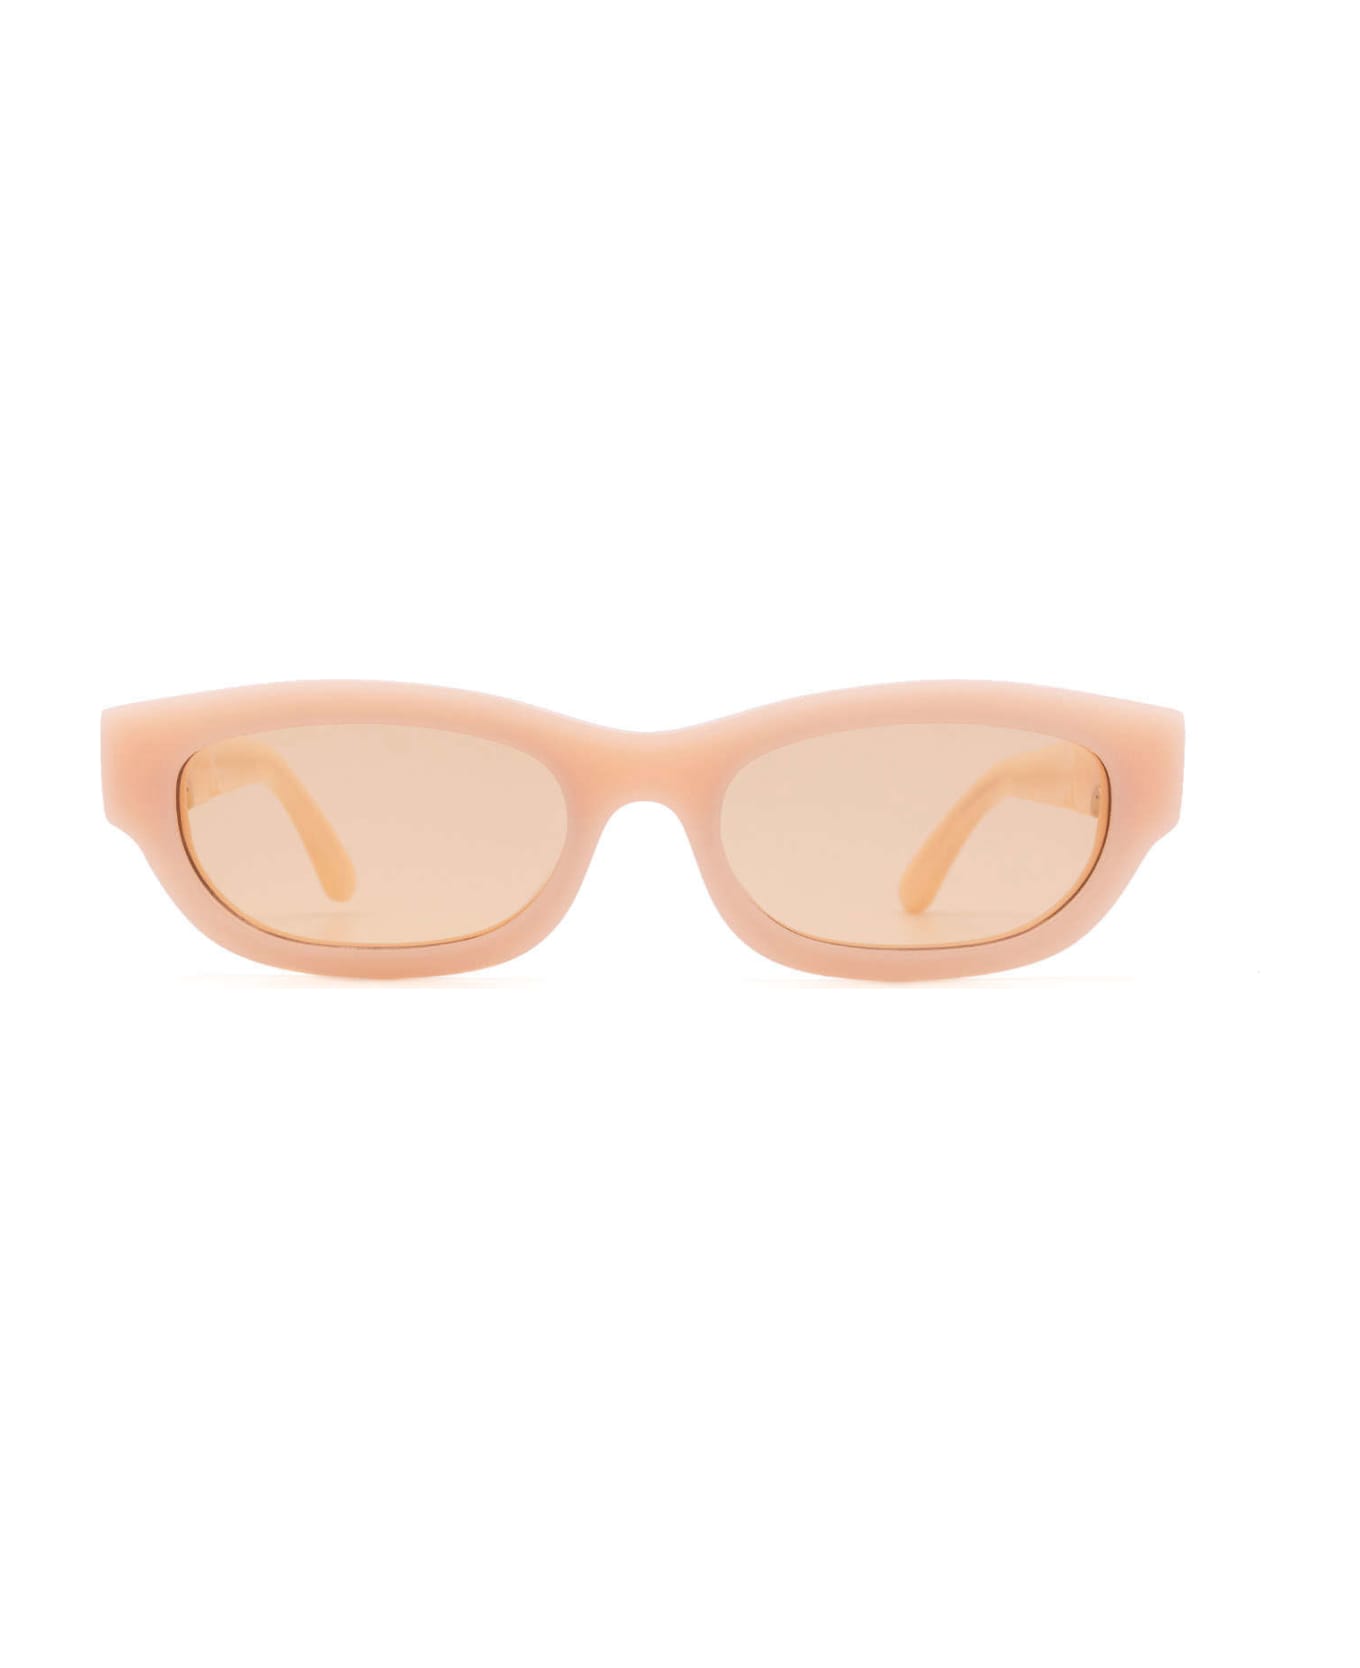 Huma Tojo Pink Sunglasses - Pink